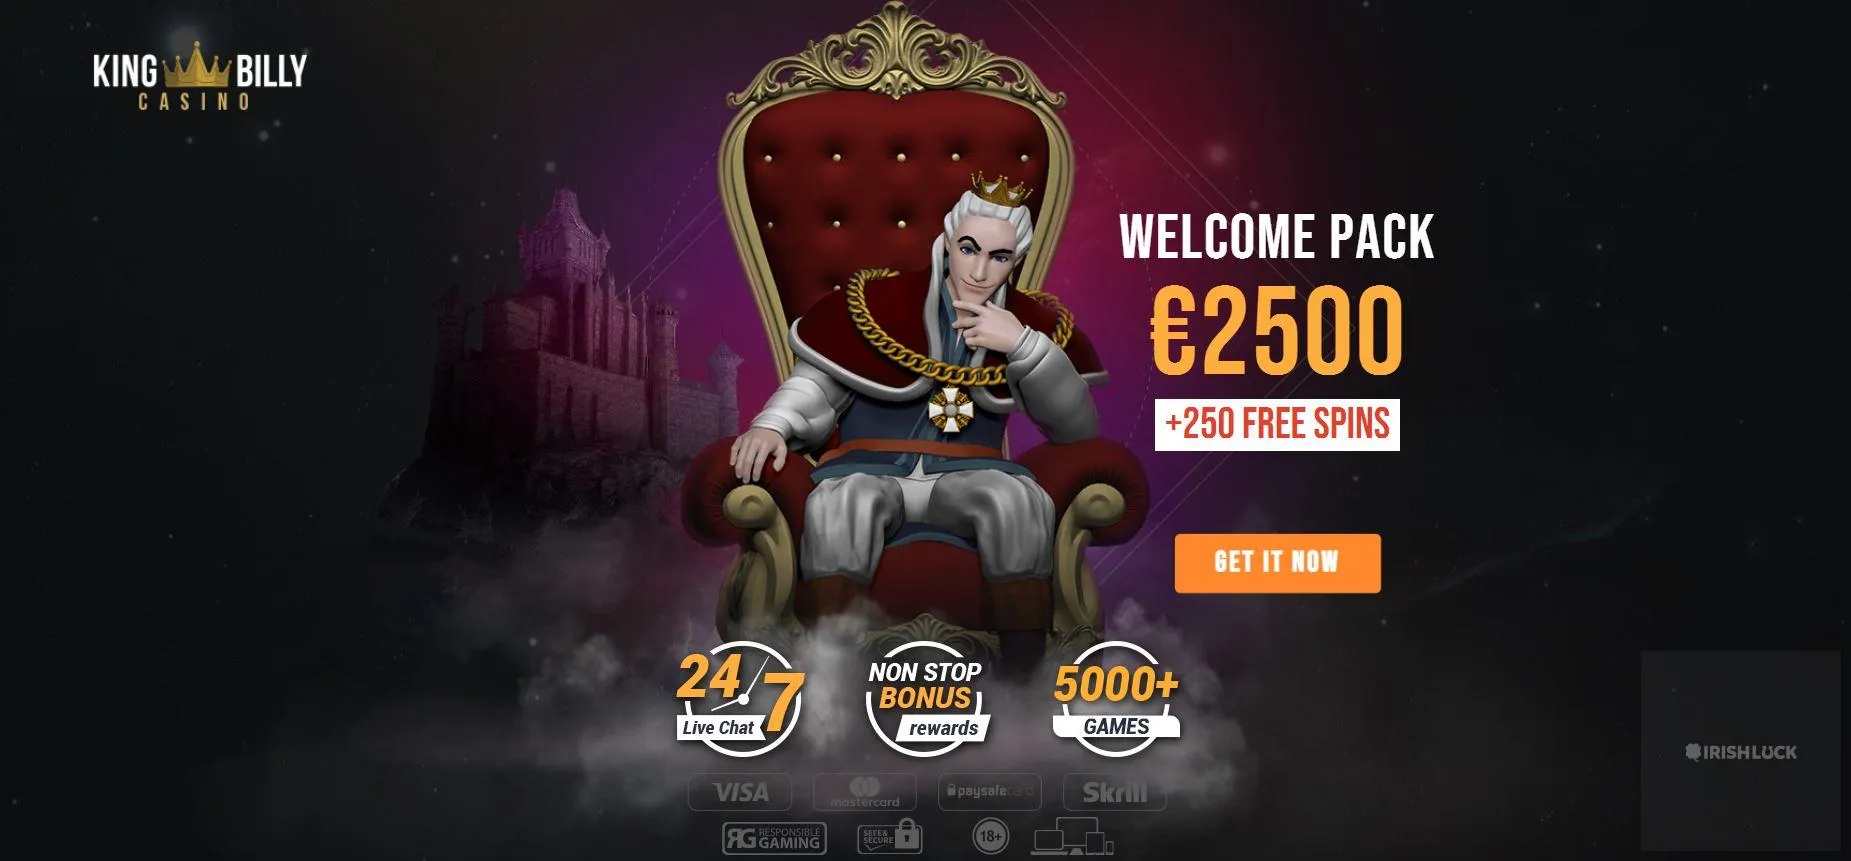 King billy online casino welcome bonus ireland online casino offer